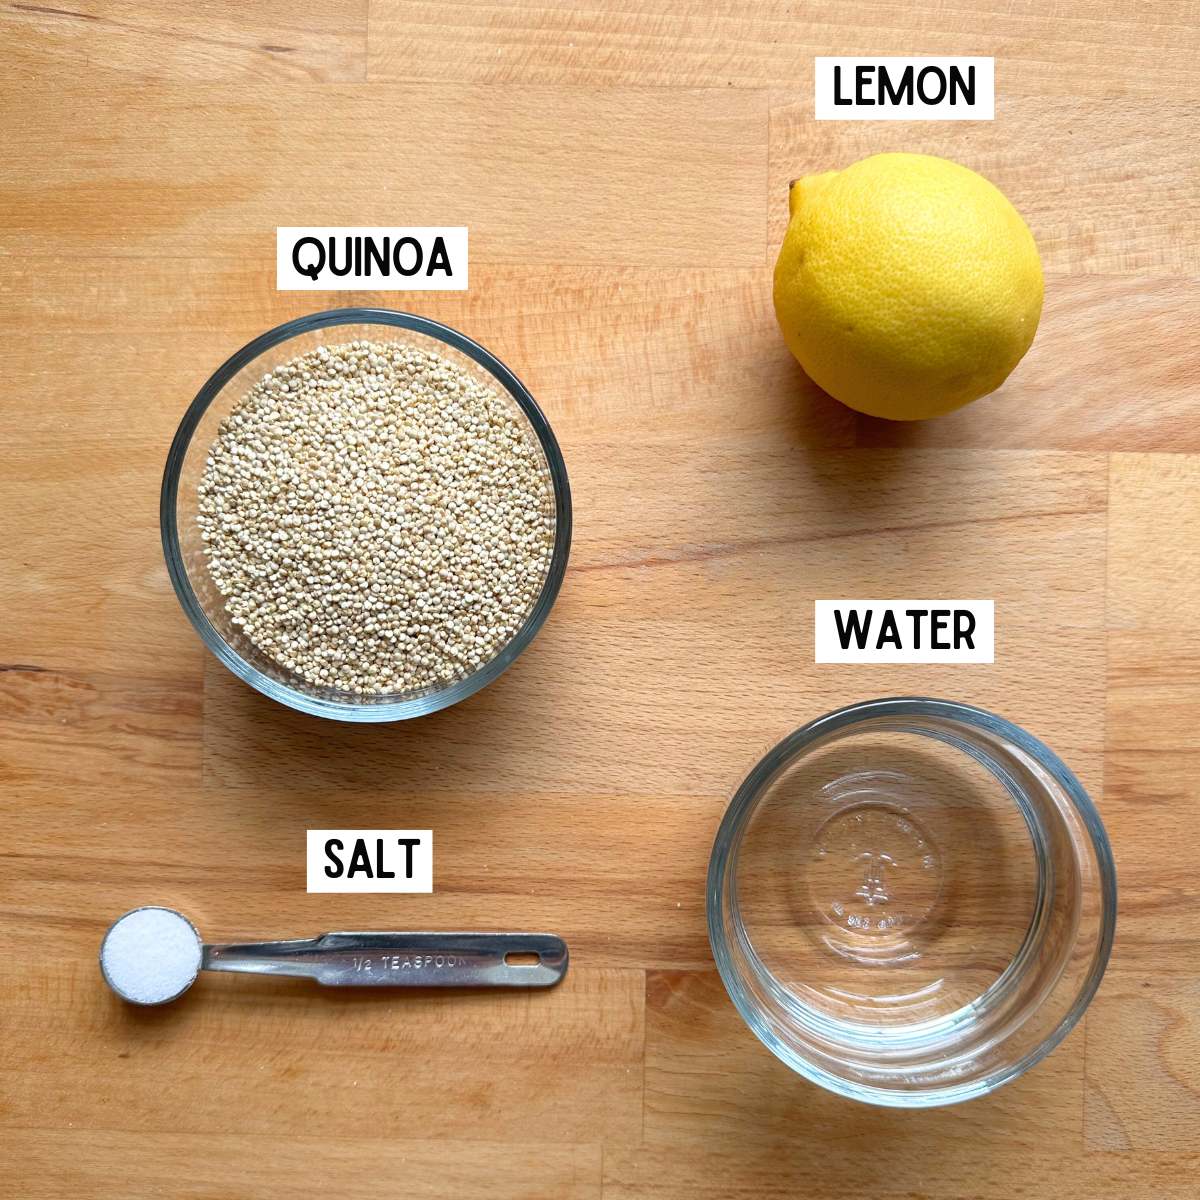 Ingredients needed to make lemon quinoa with corresponding labels: quinoa, lemon, salt, and water.